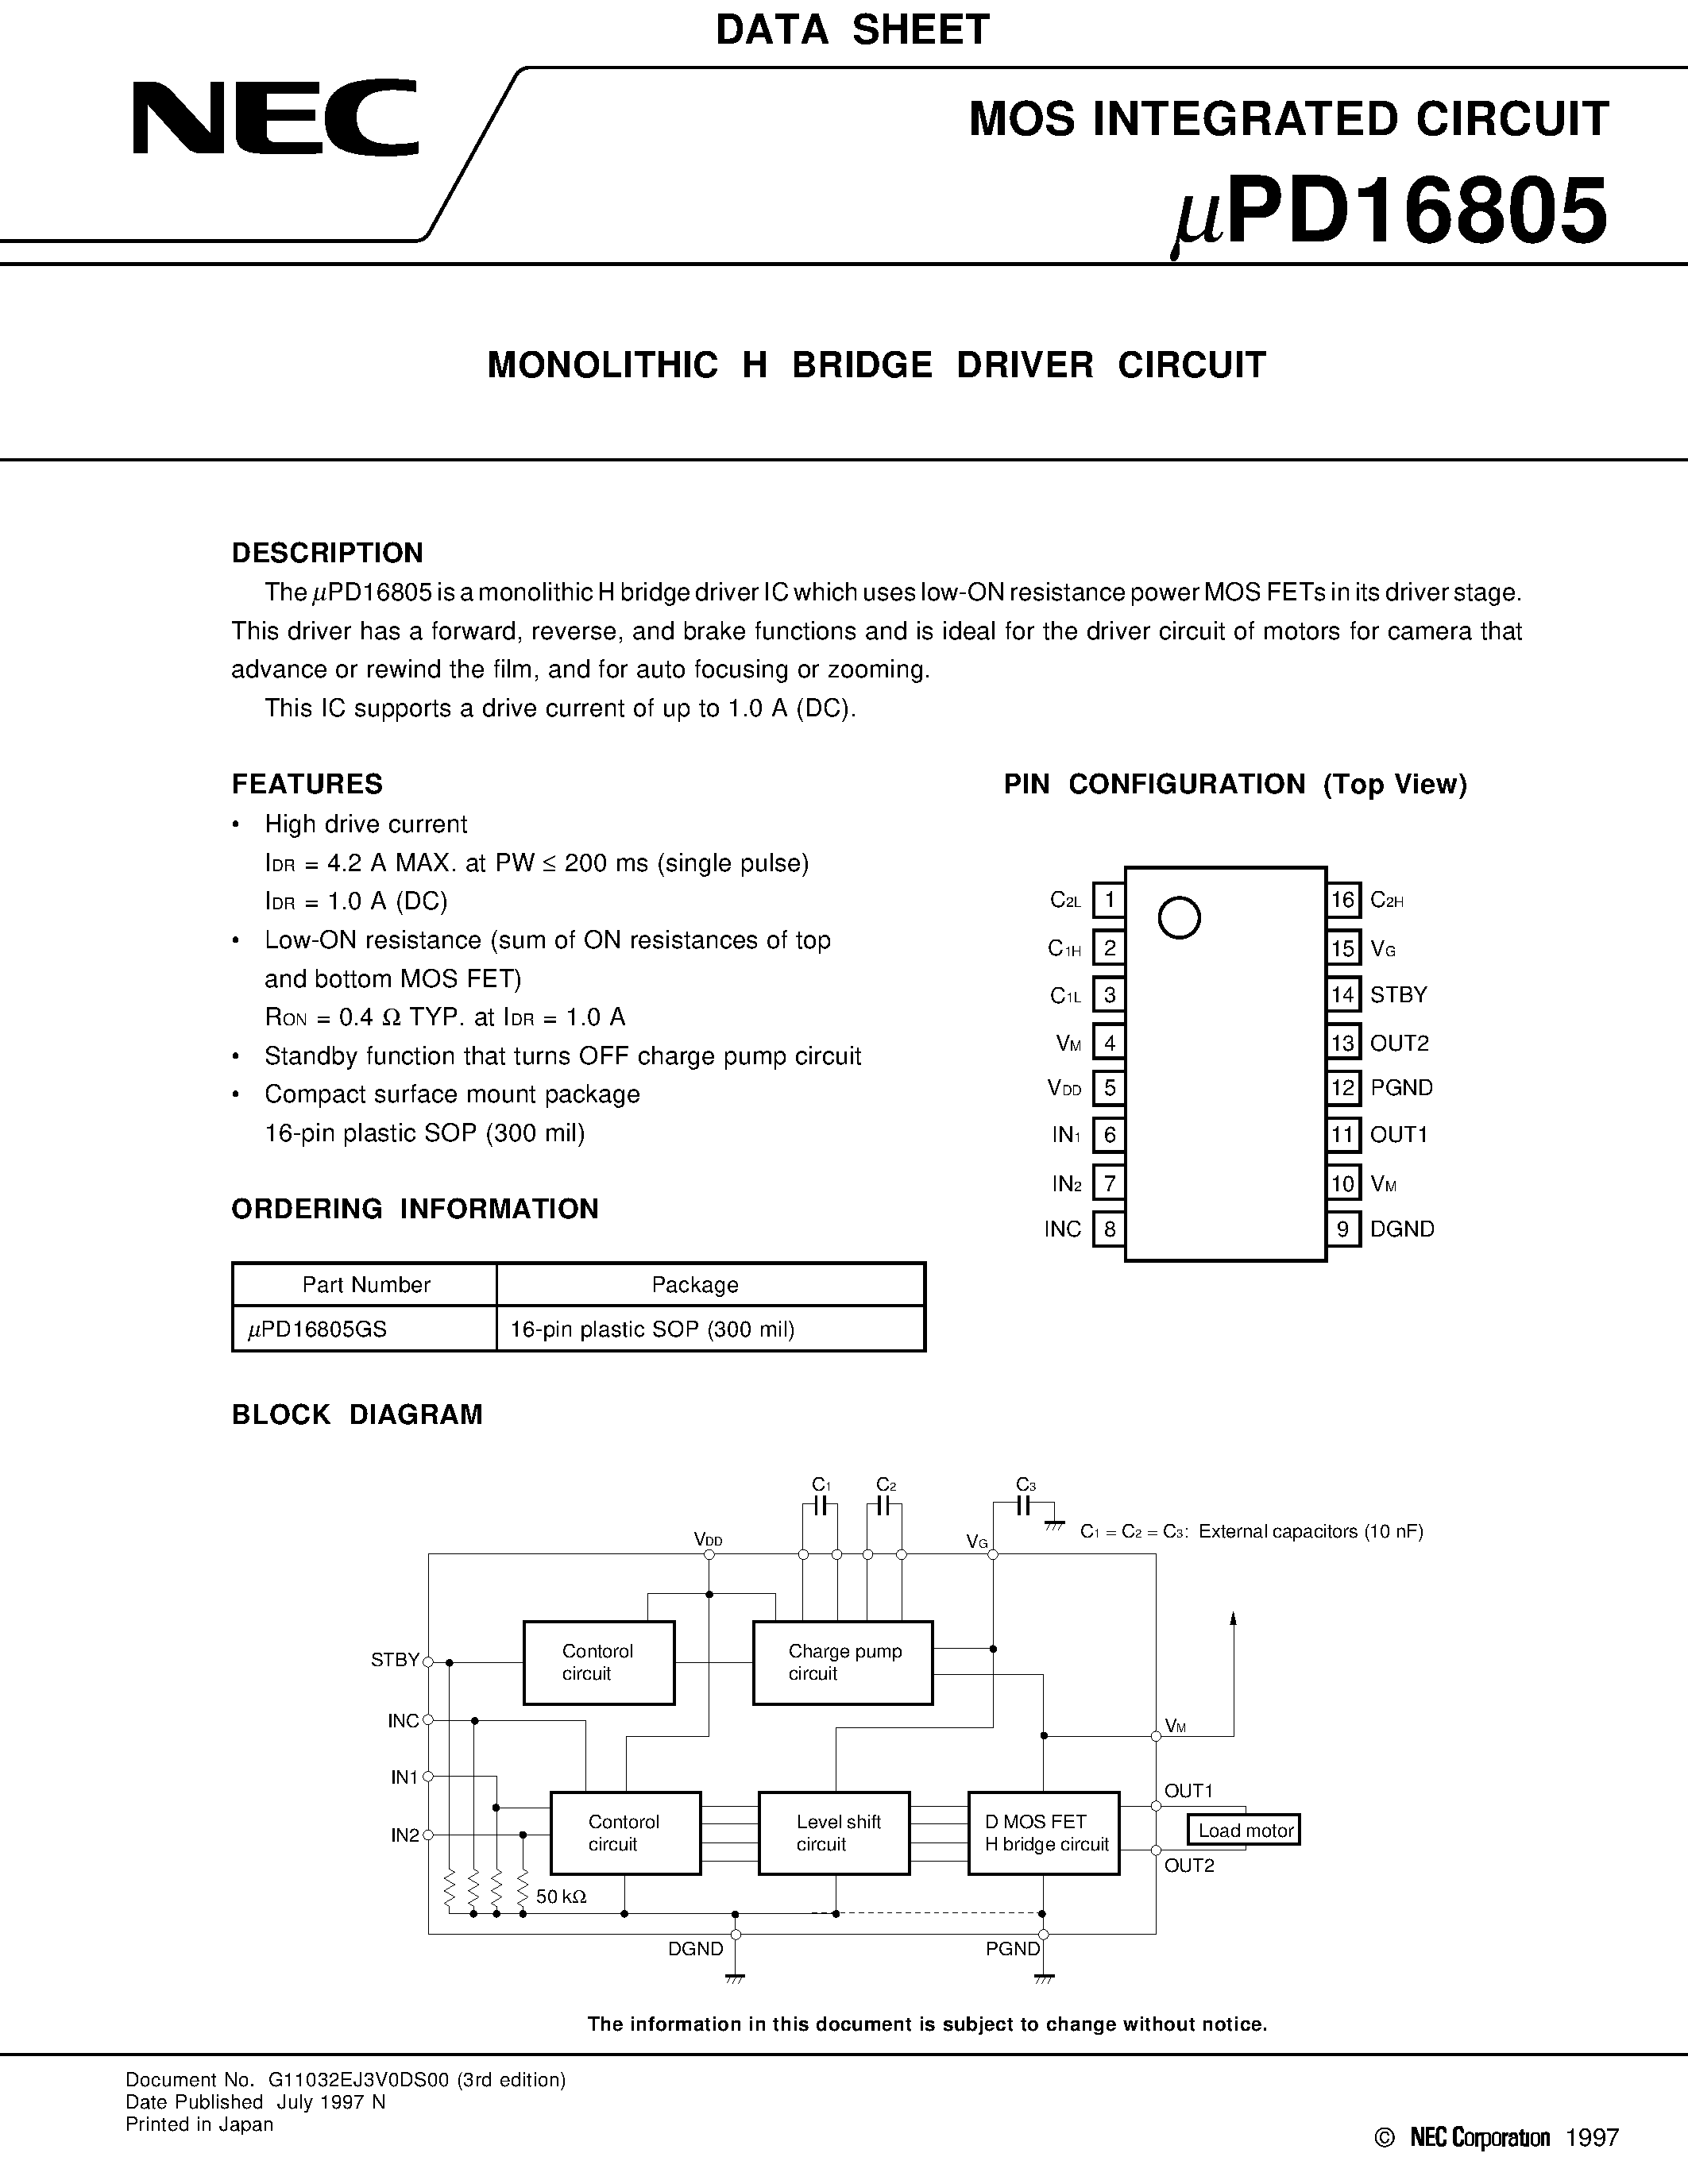 Даташит UPD16805 - MONOLITHIC H BRIDGE DRIVER CIRCUIT страница 1